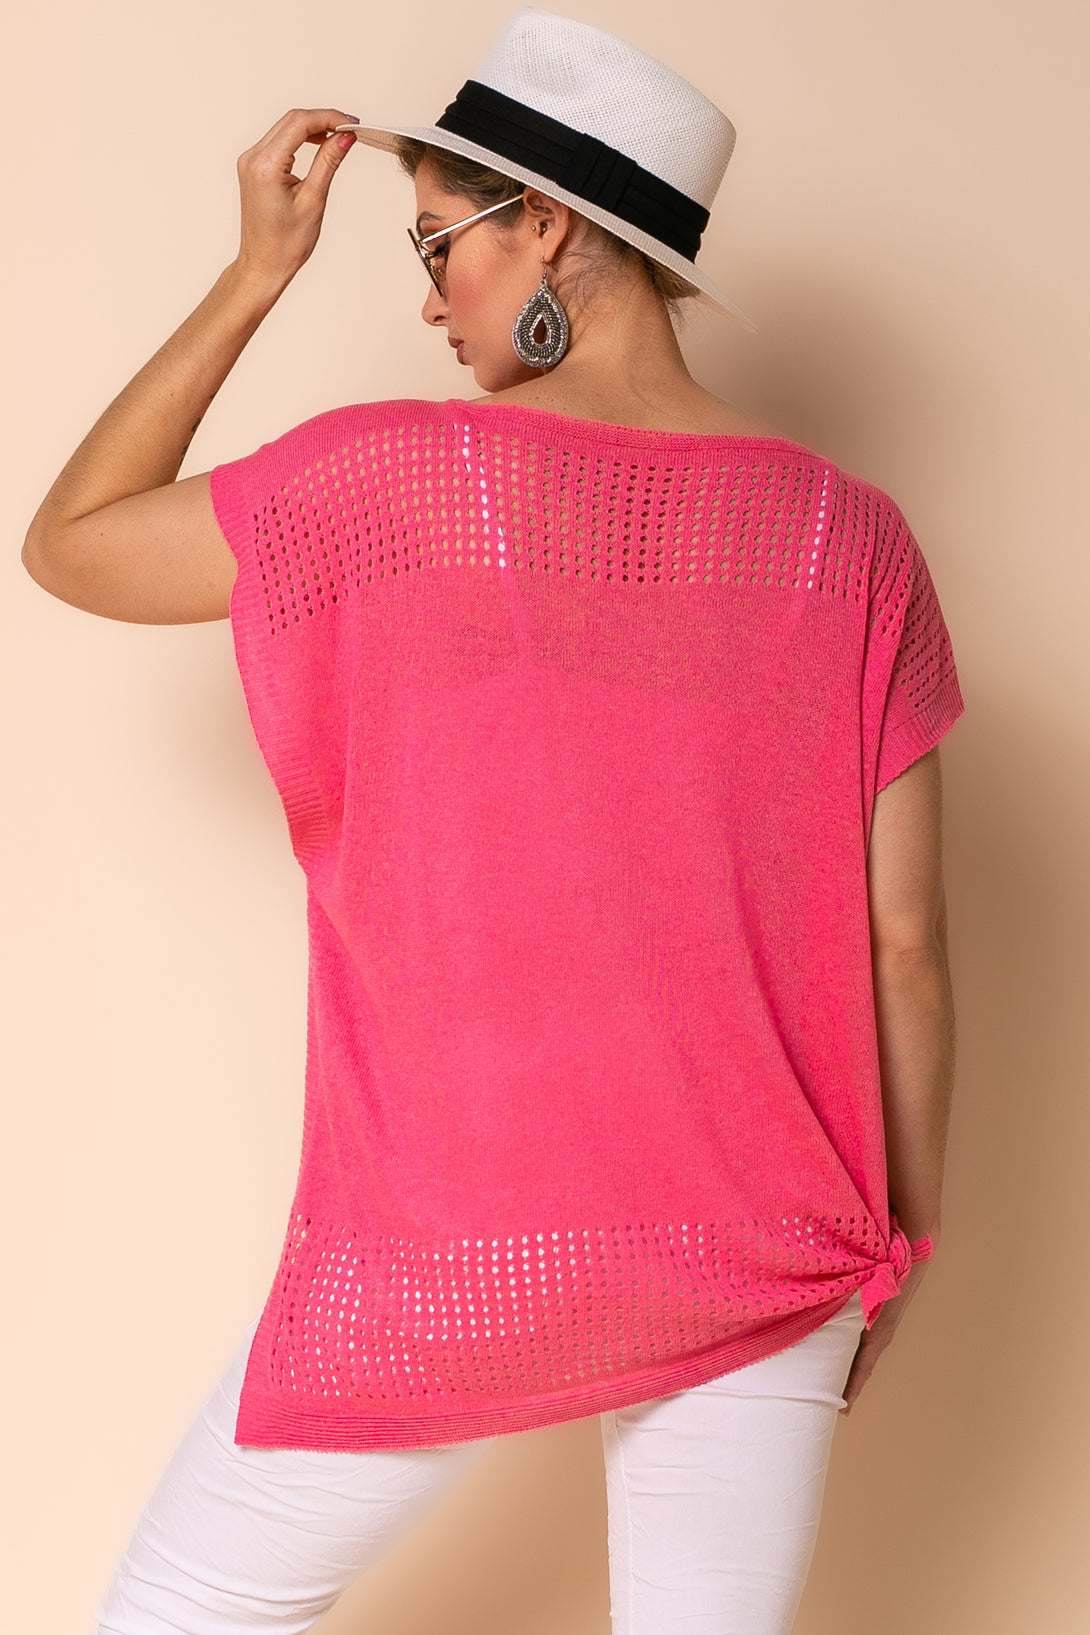 Pele Cotton Blend Poncho in Raspberry Sorbet - Imagine Fashion